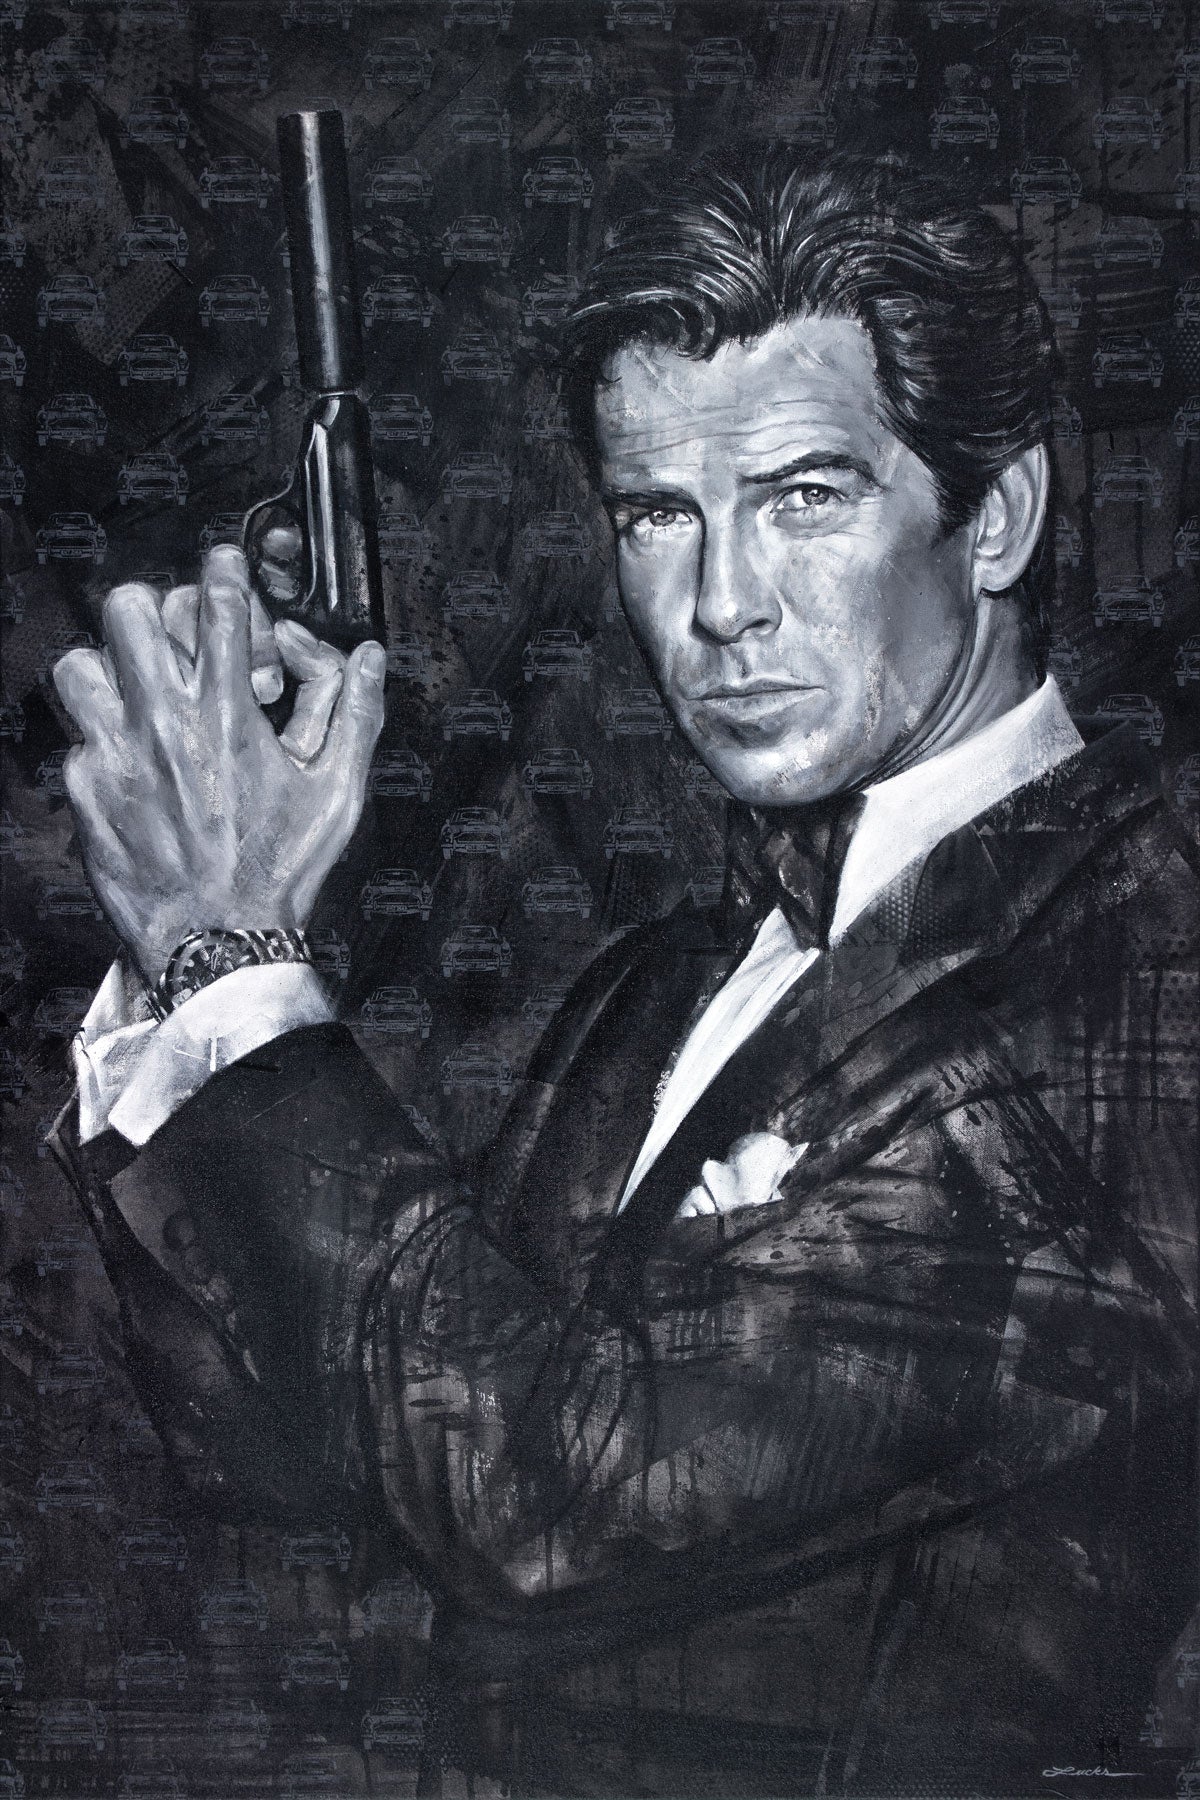 Pierce Brosnan is James Bond